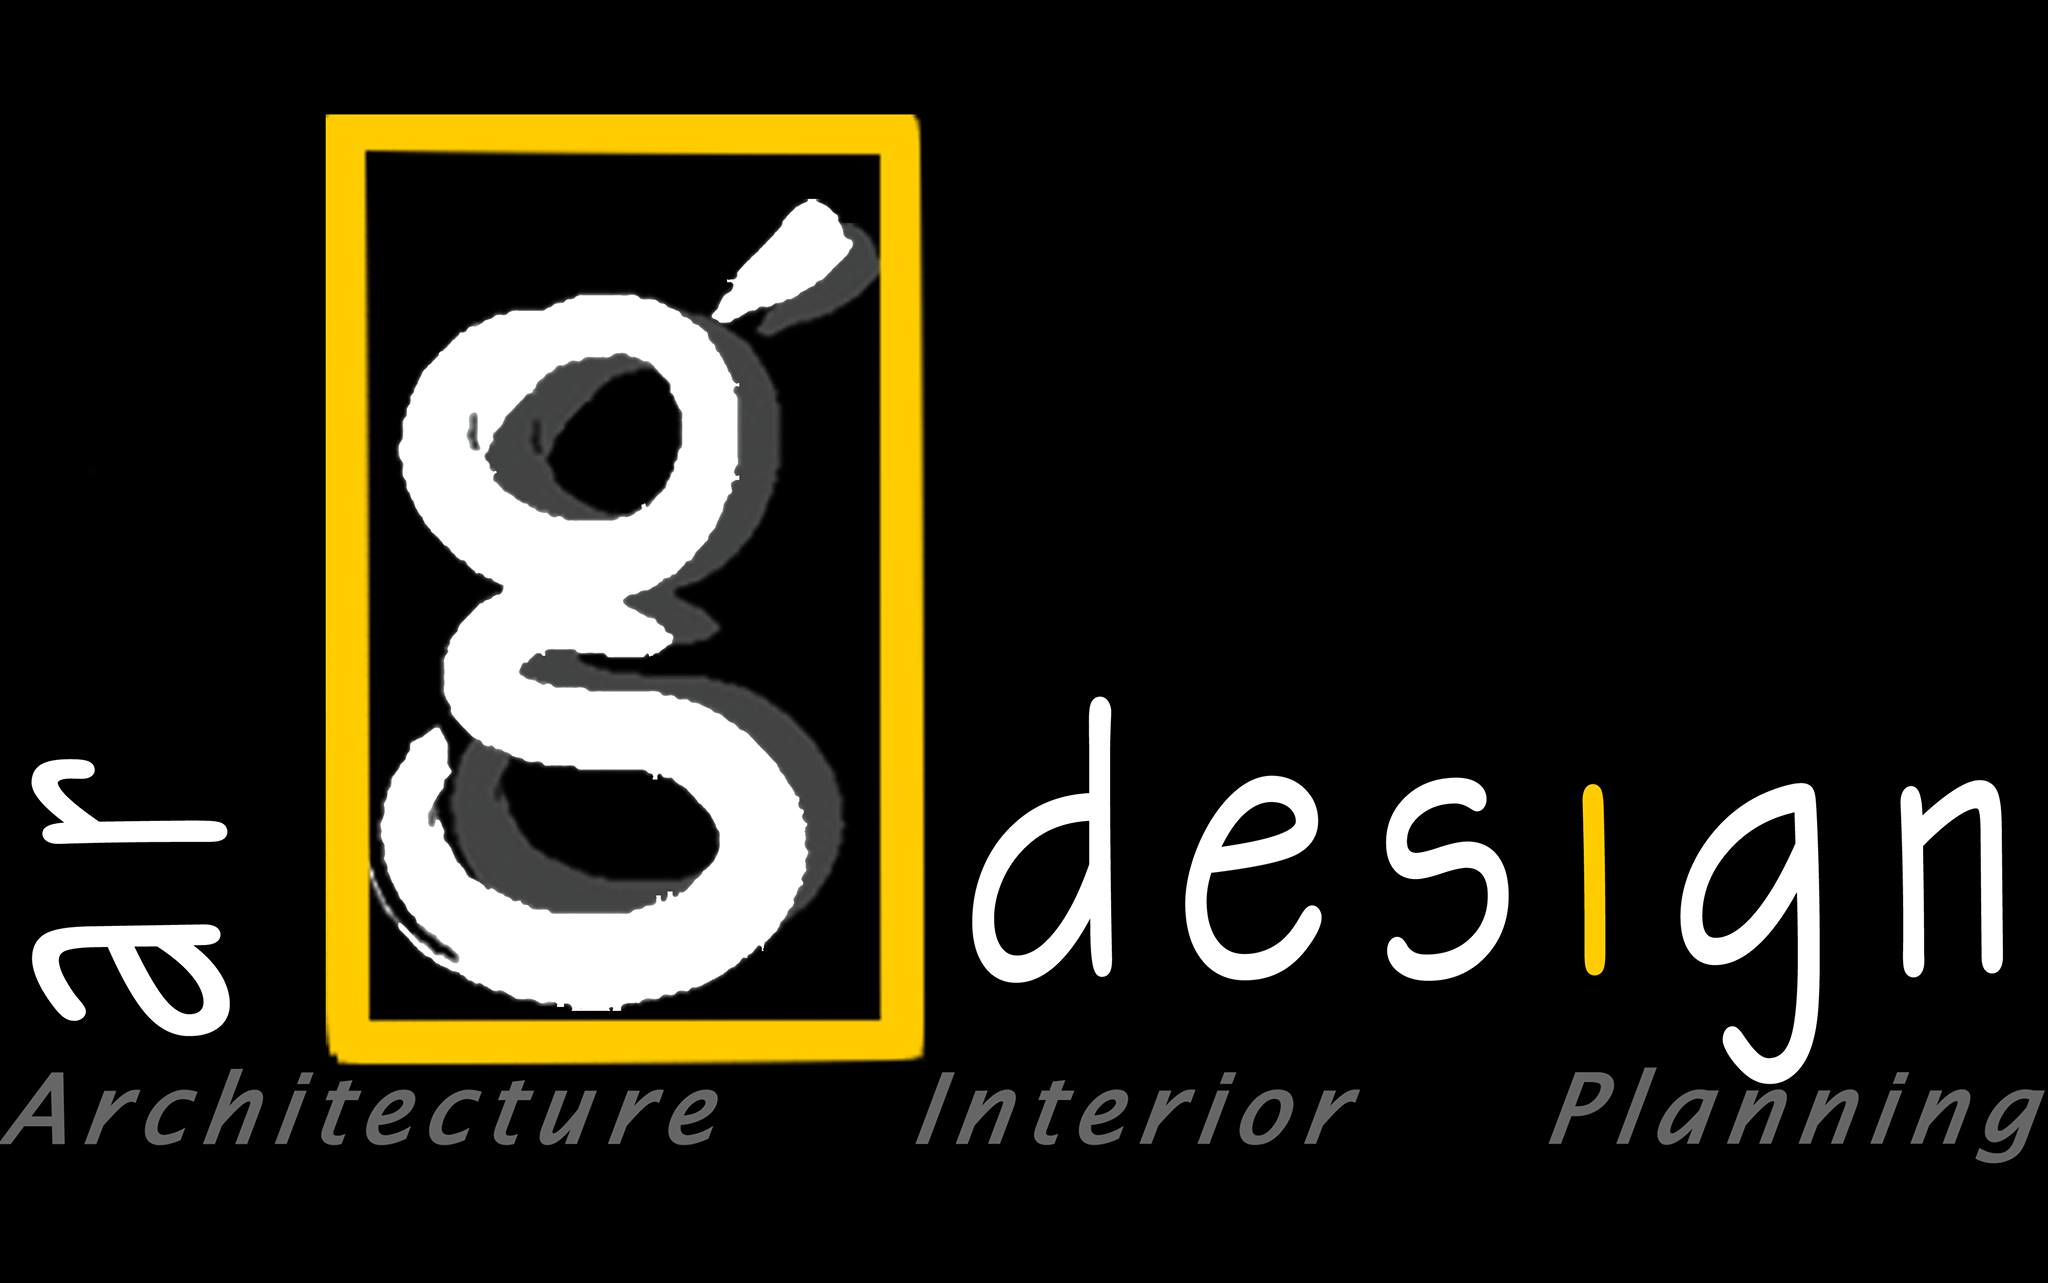 AR G DESIGN|Architect|Professional Services